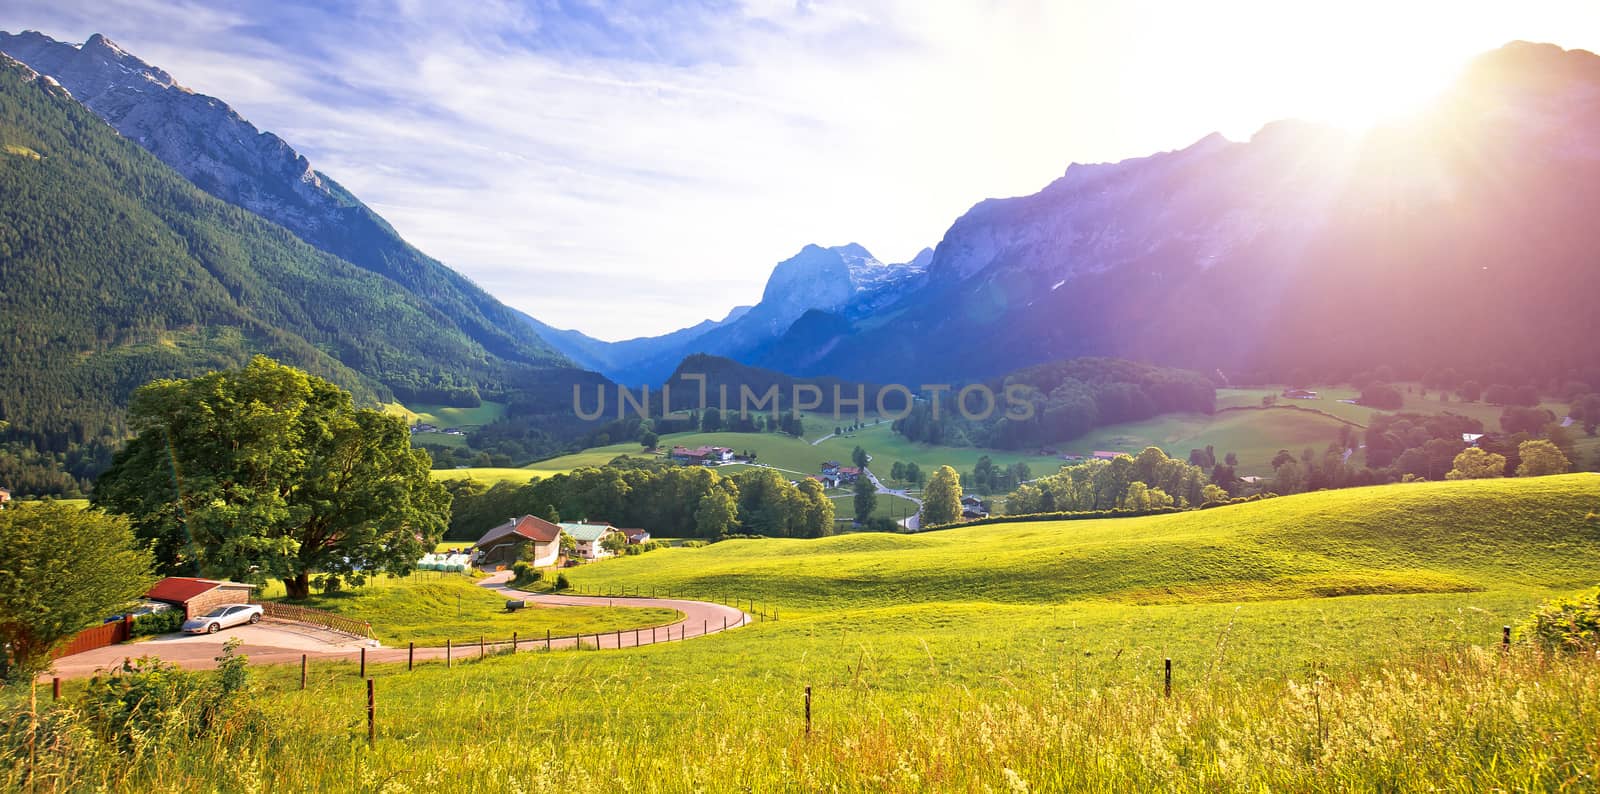 Ramsau valley in Berchtesgaden Alpine region landscape panoramic view, Bavaria region of Germany